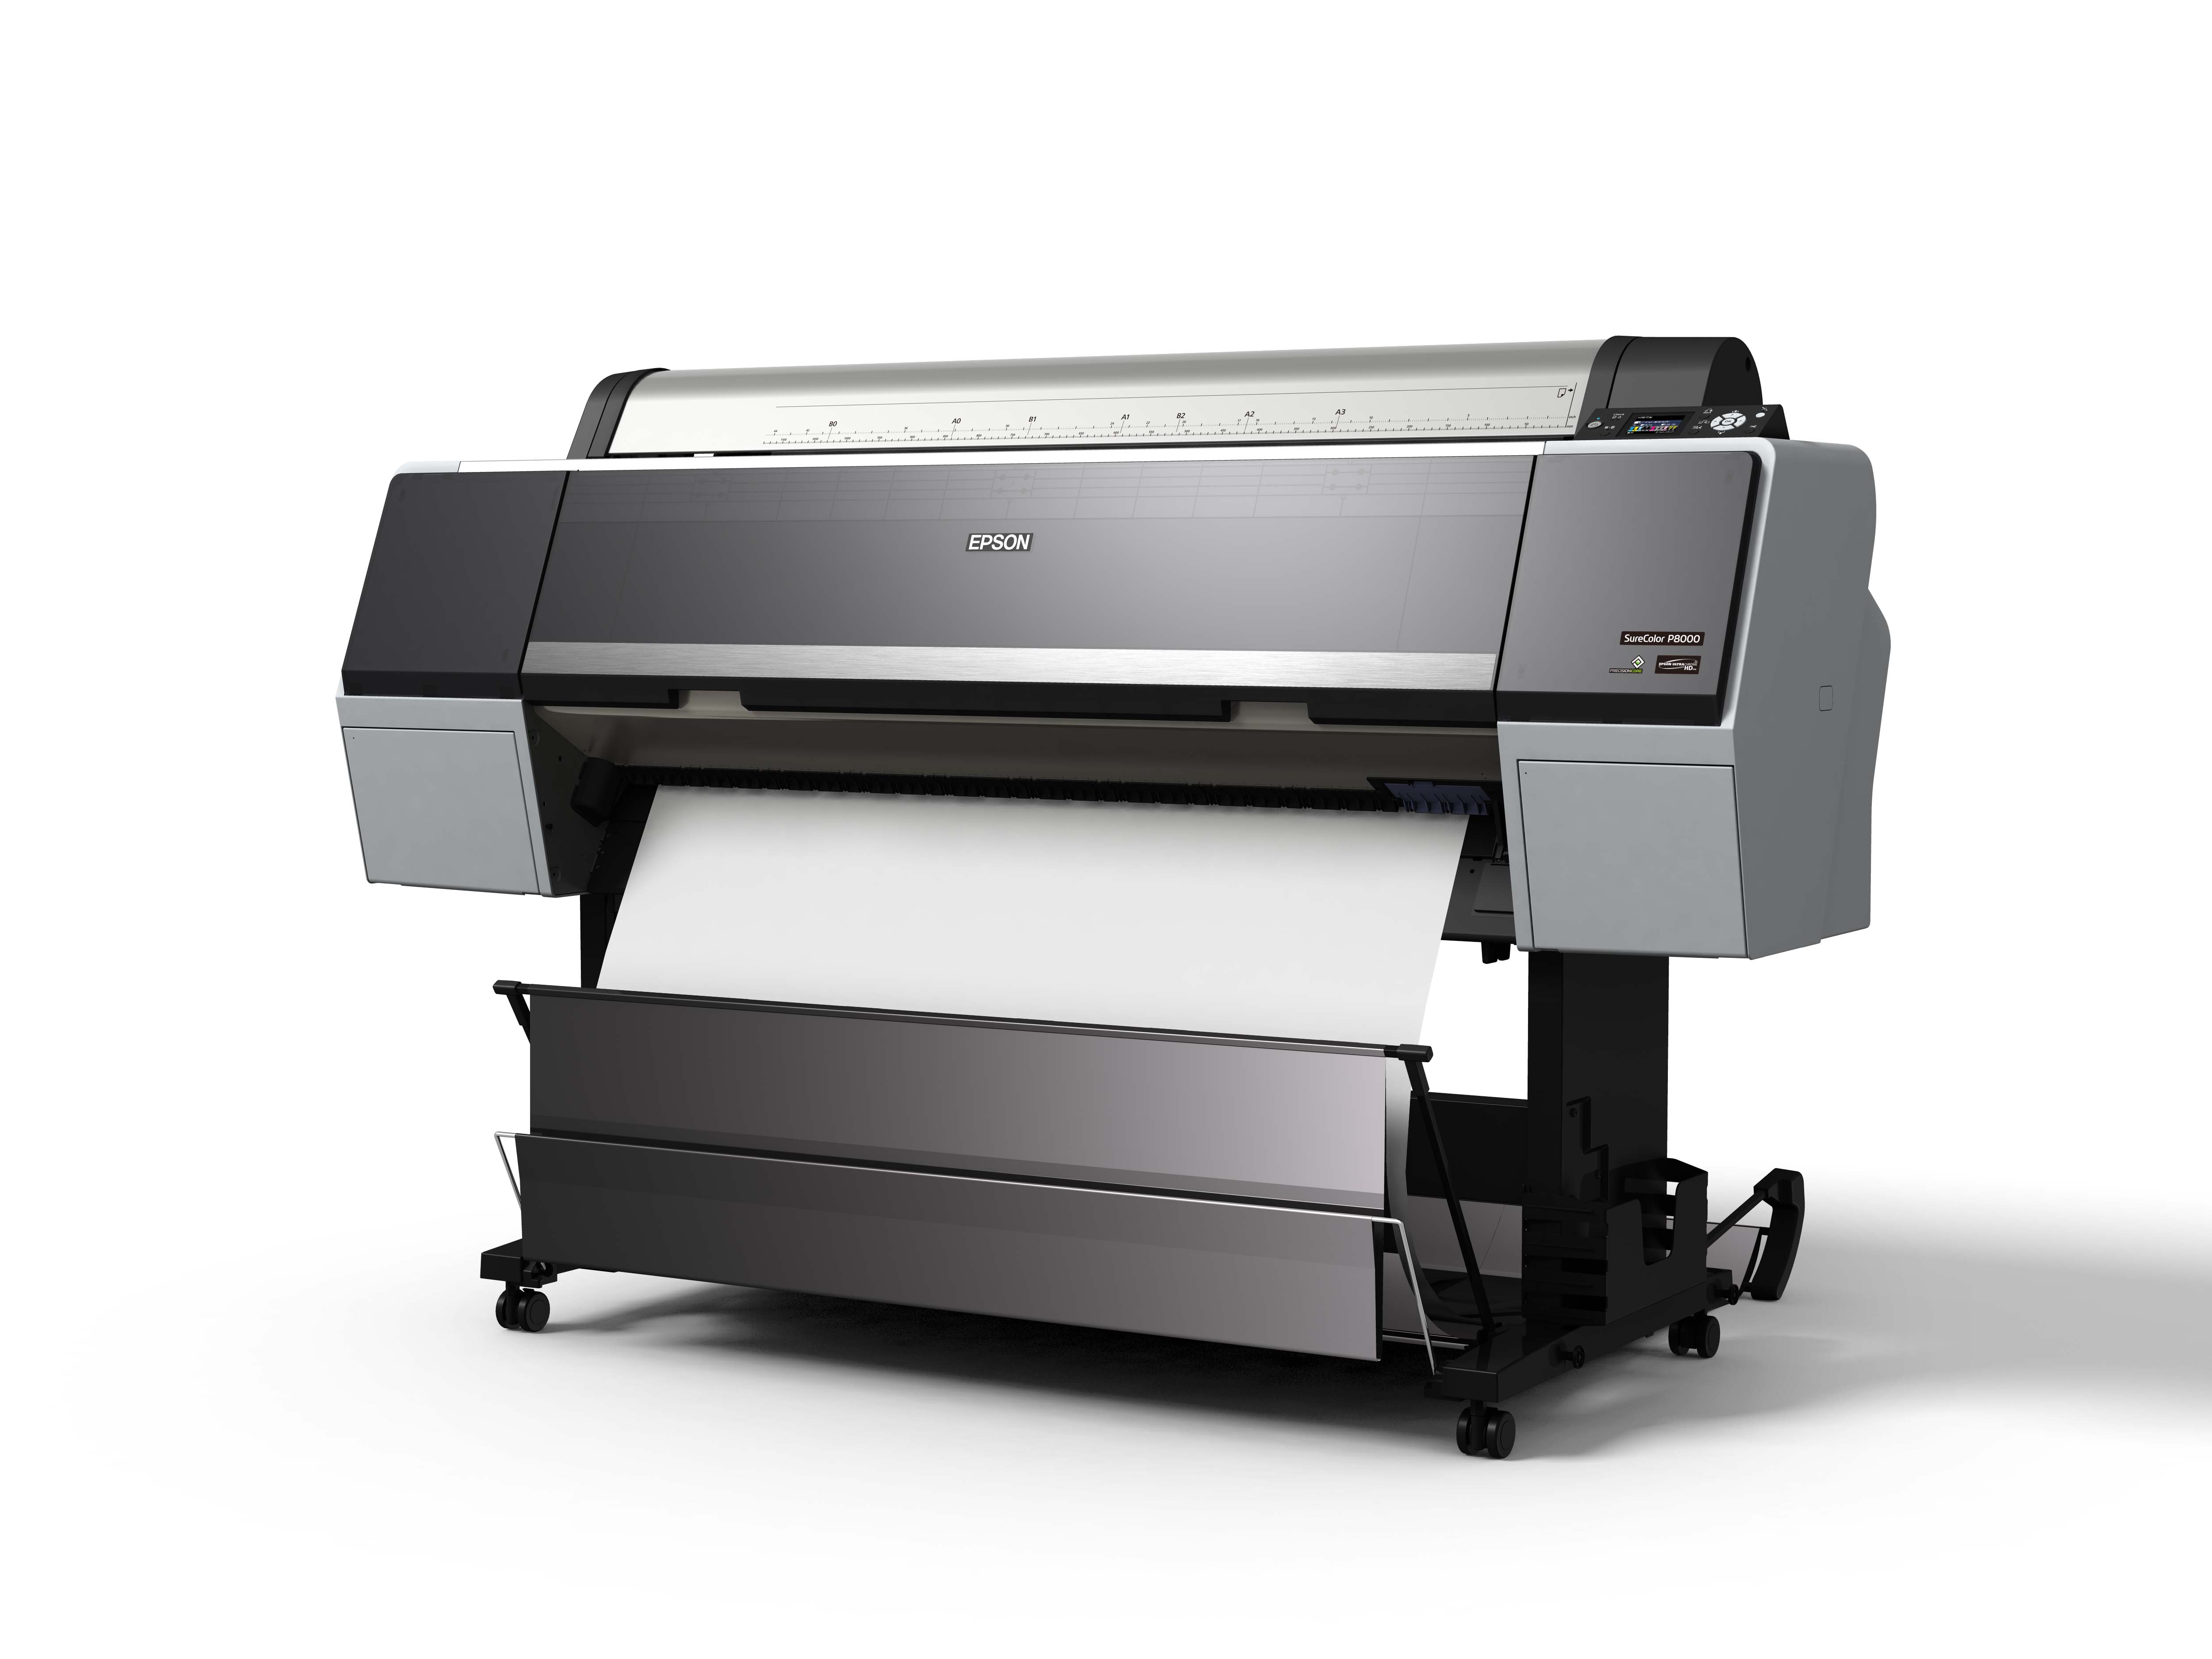 Impresora Epson Surecolor scp8000 std color 2880 x 1440dpi de gran formato 1440 tinta escpr cian negro claro magenta mate naranja precisioncore tfp 0.08 1.5